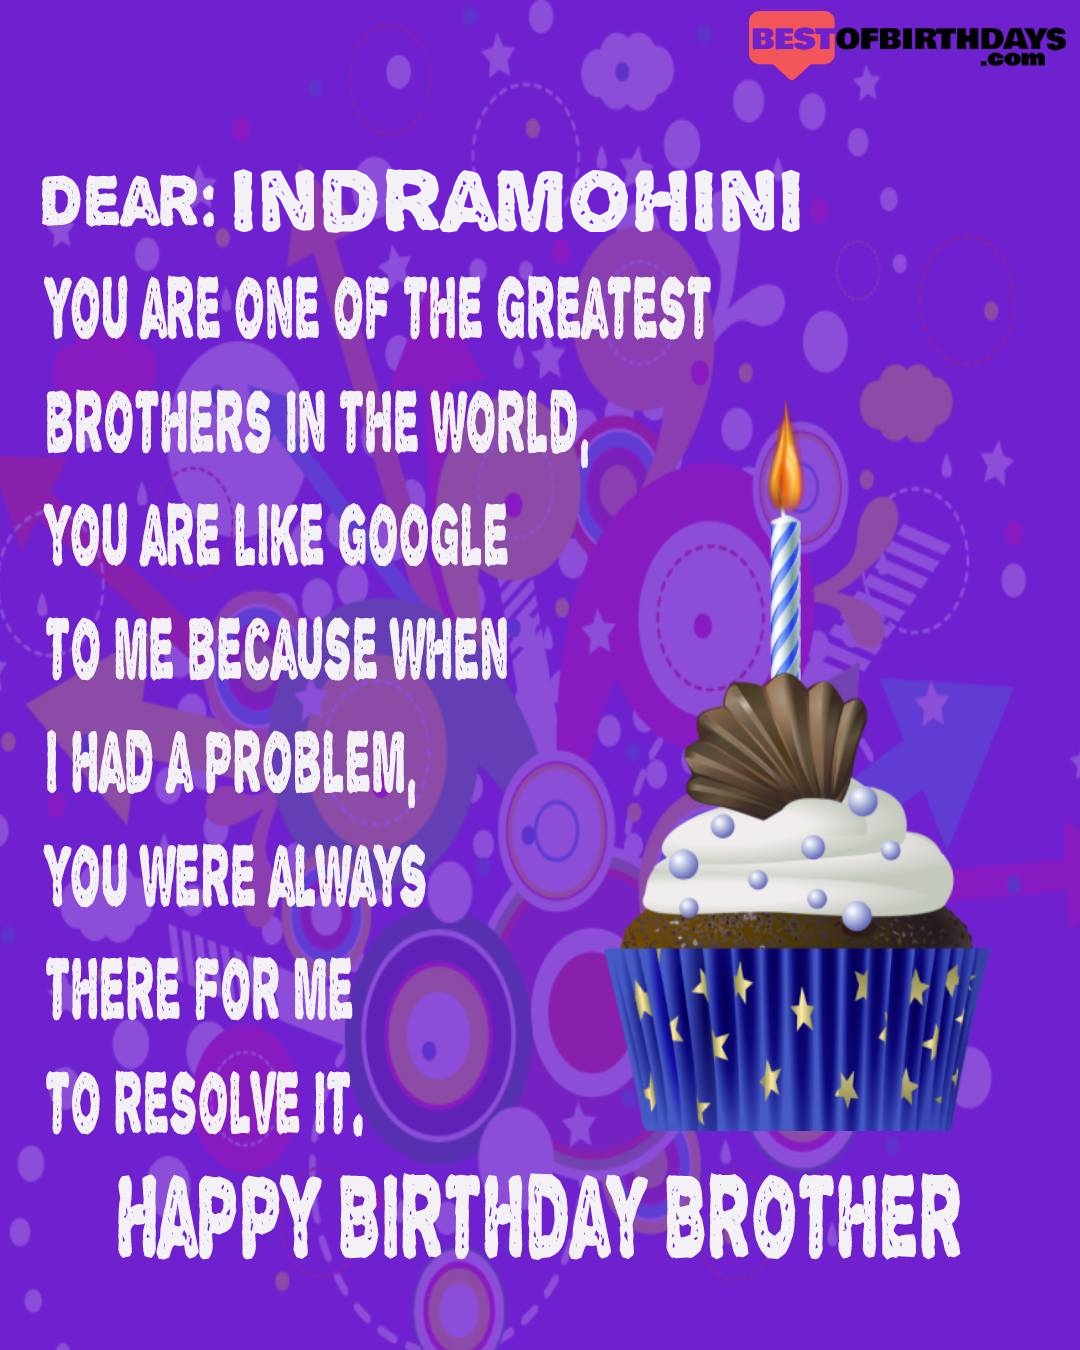 Happy birthday indramohini bhai brother bro